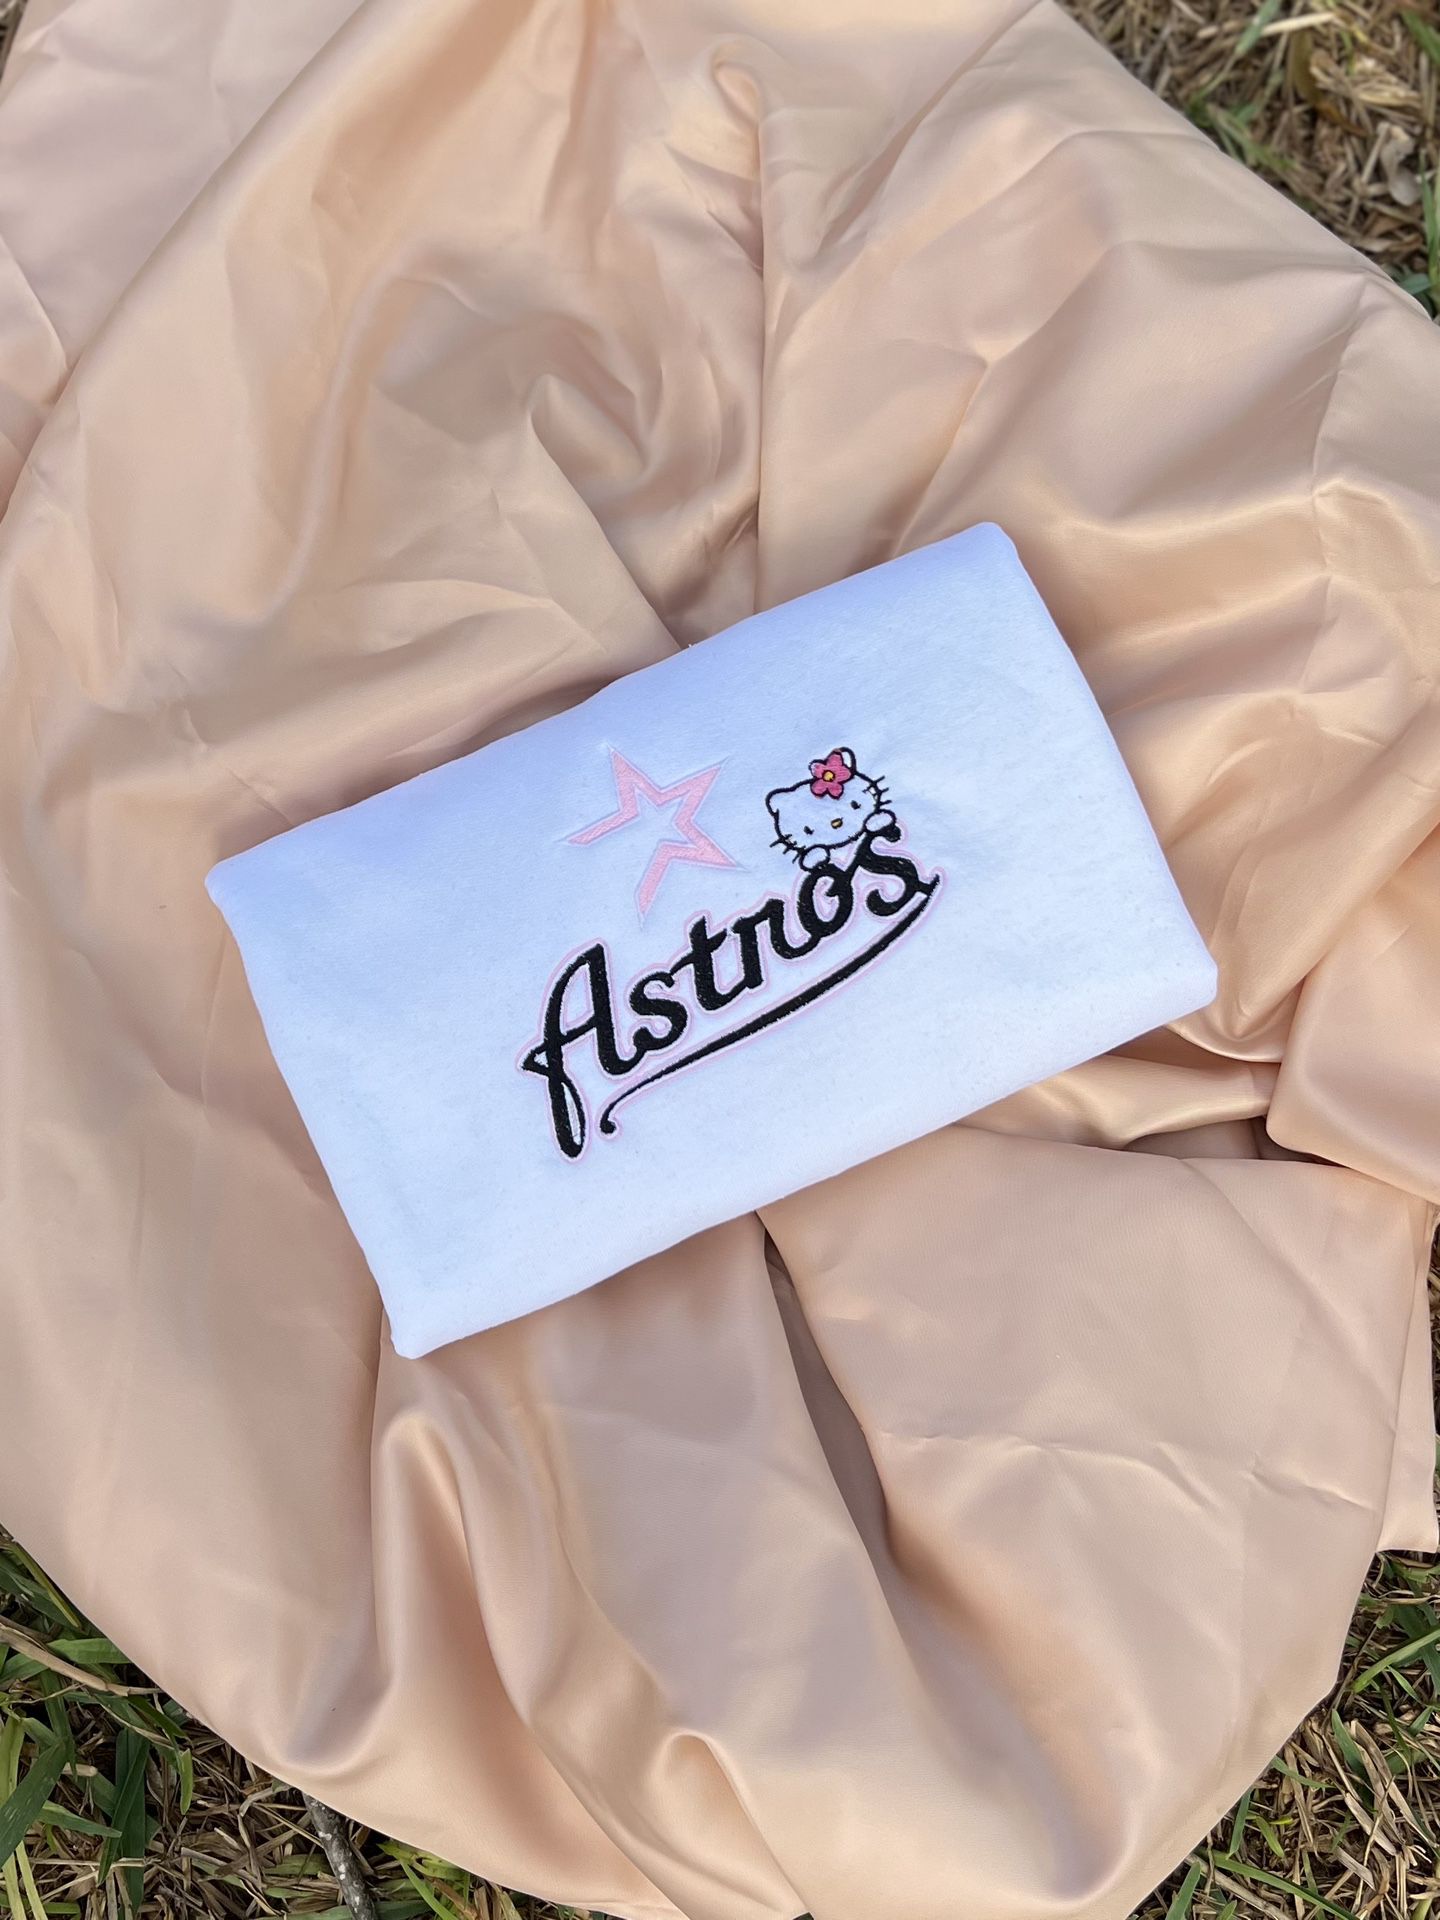 Astros x Hello Kitty Sweatshirt 